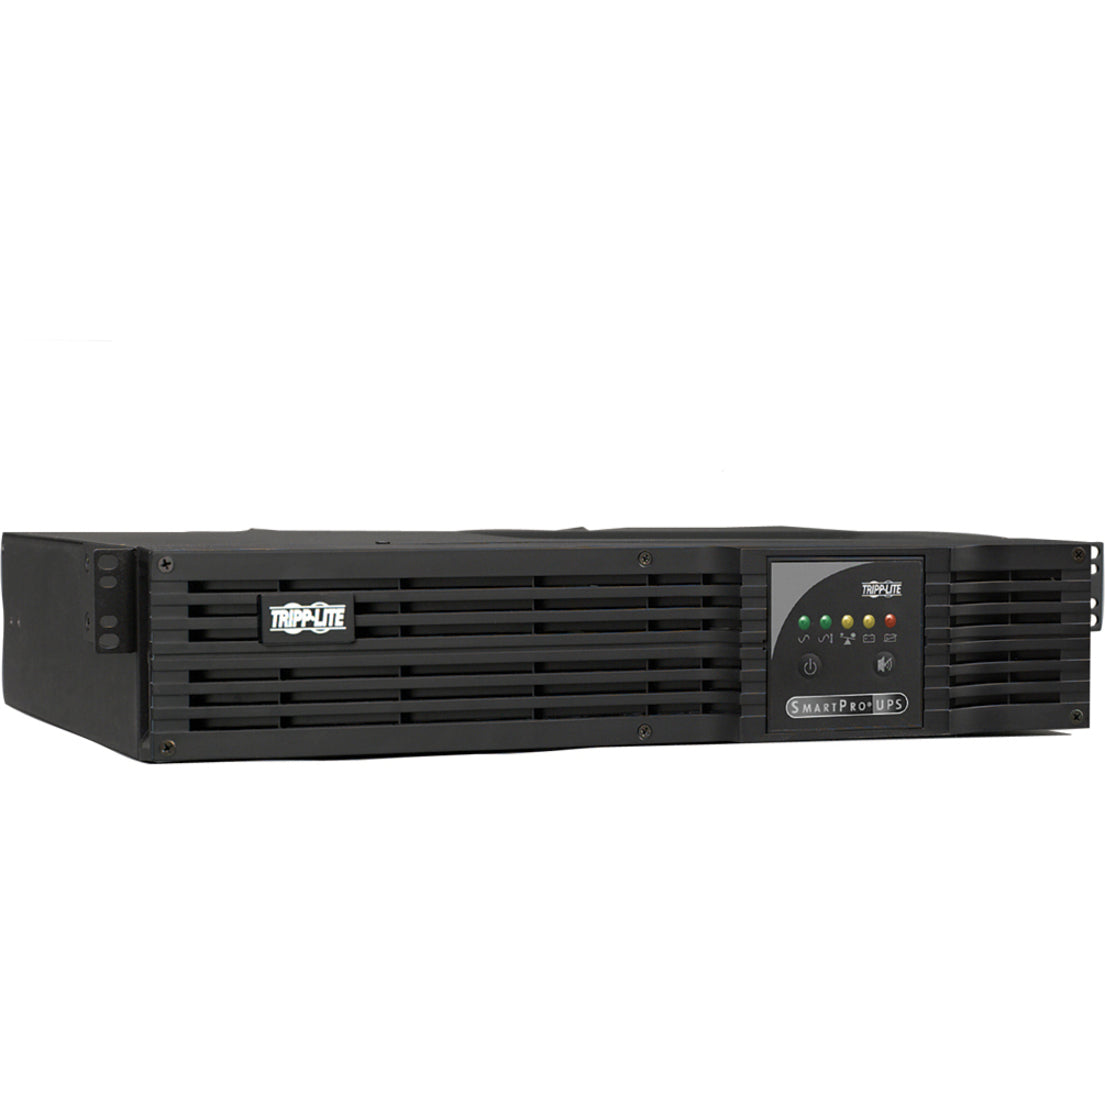 Tripp Lite SMX1000RT2U SmartPro 1000VA UPS, Rackmountable/Tower, 6 Outlets, USB/DB9, 2 Year Warranty